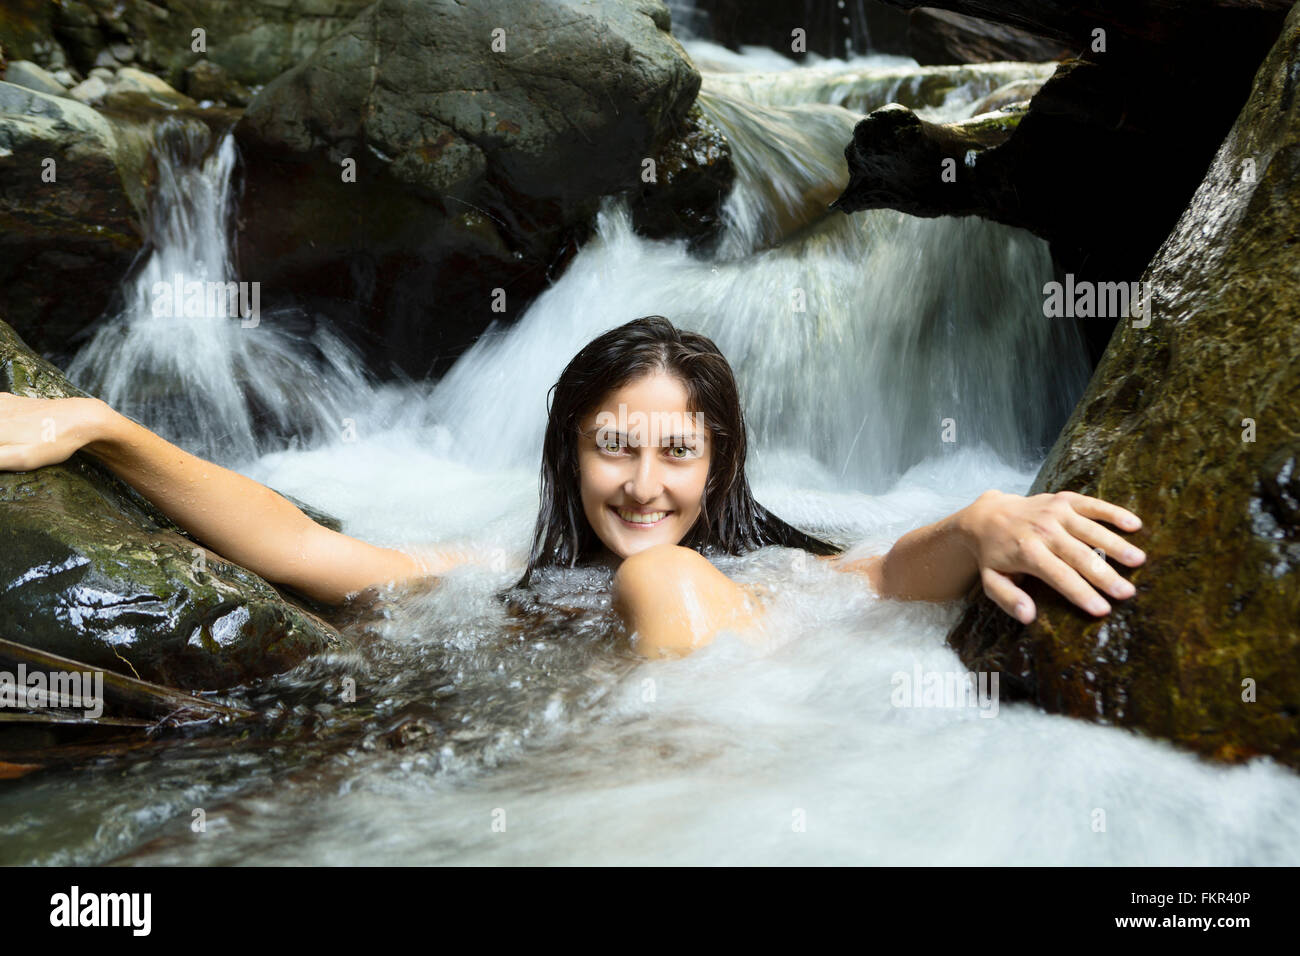 Mixed race woman sitting in waterfall Stock Photo